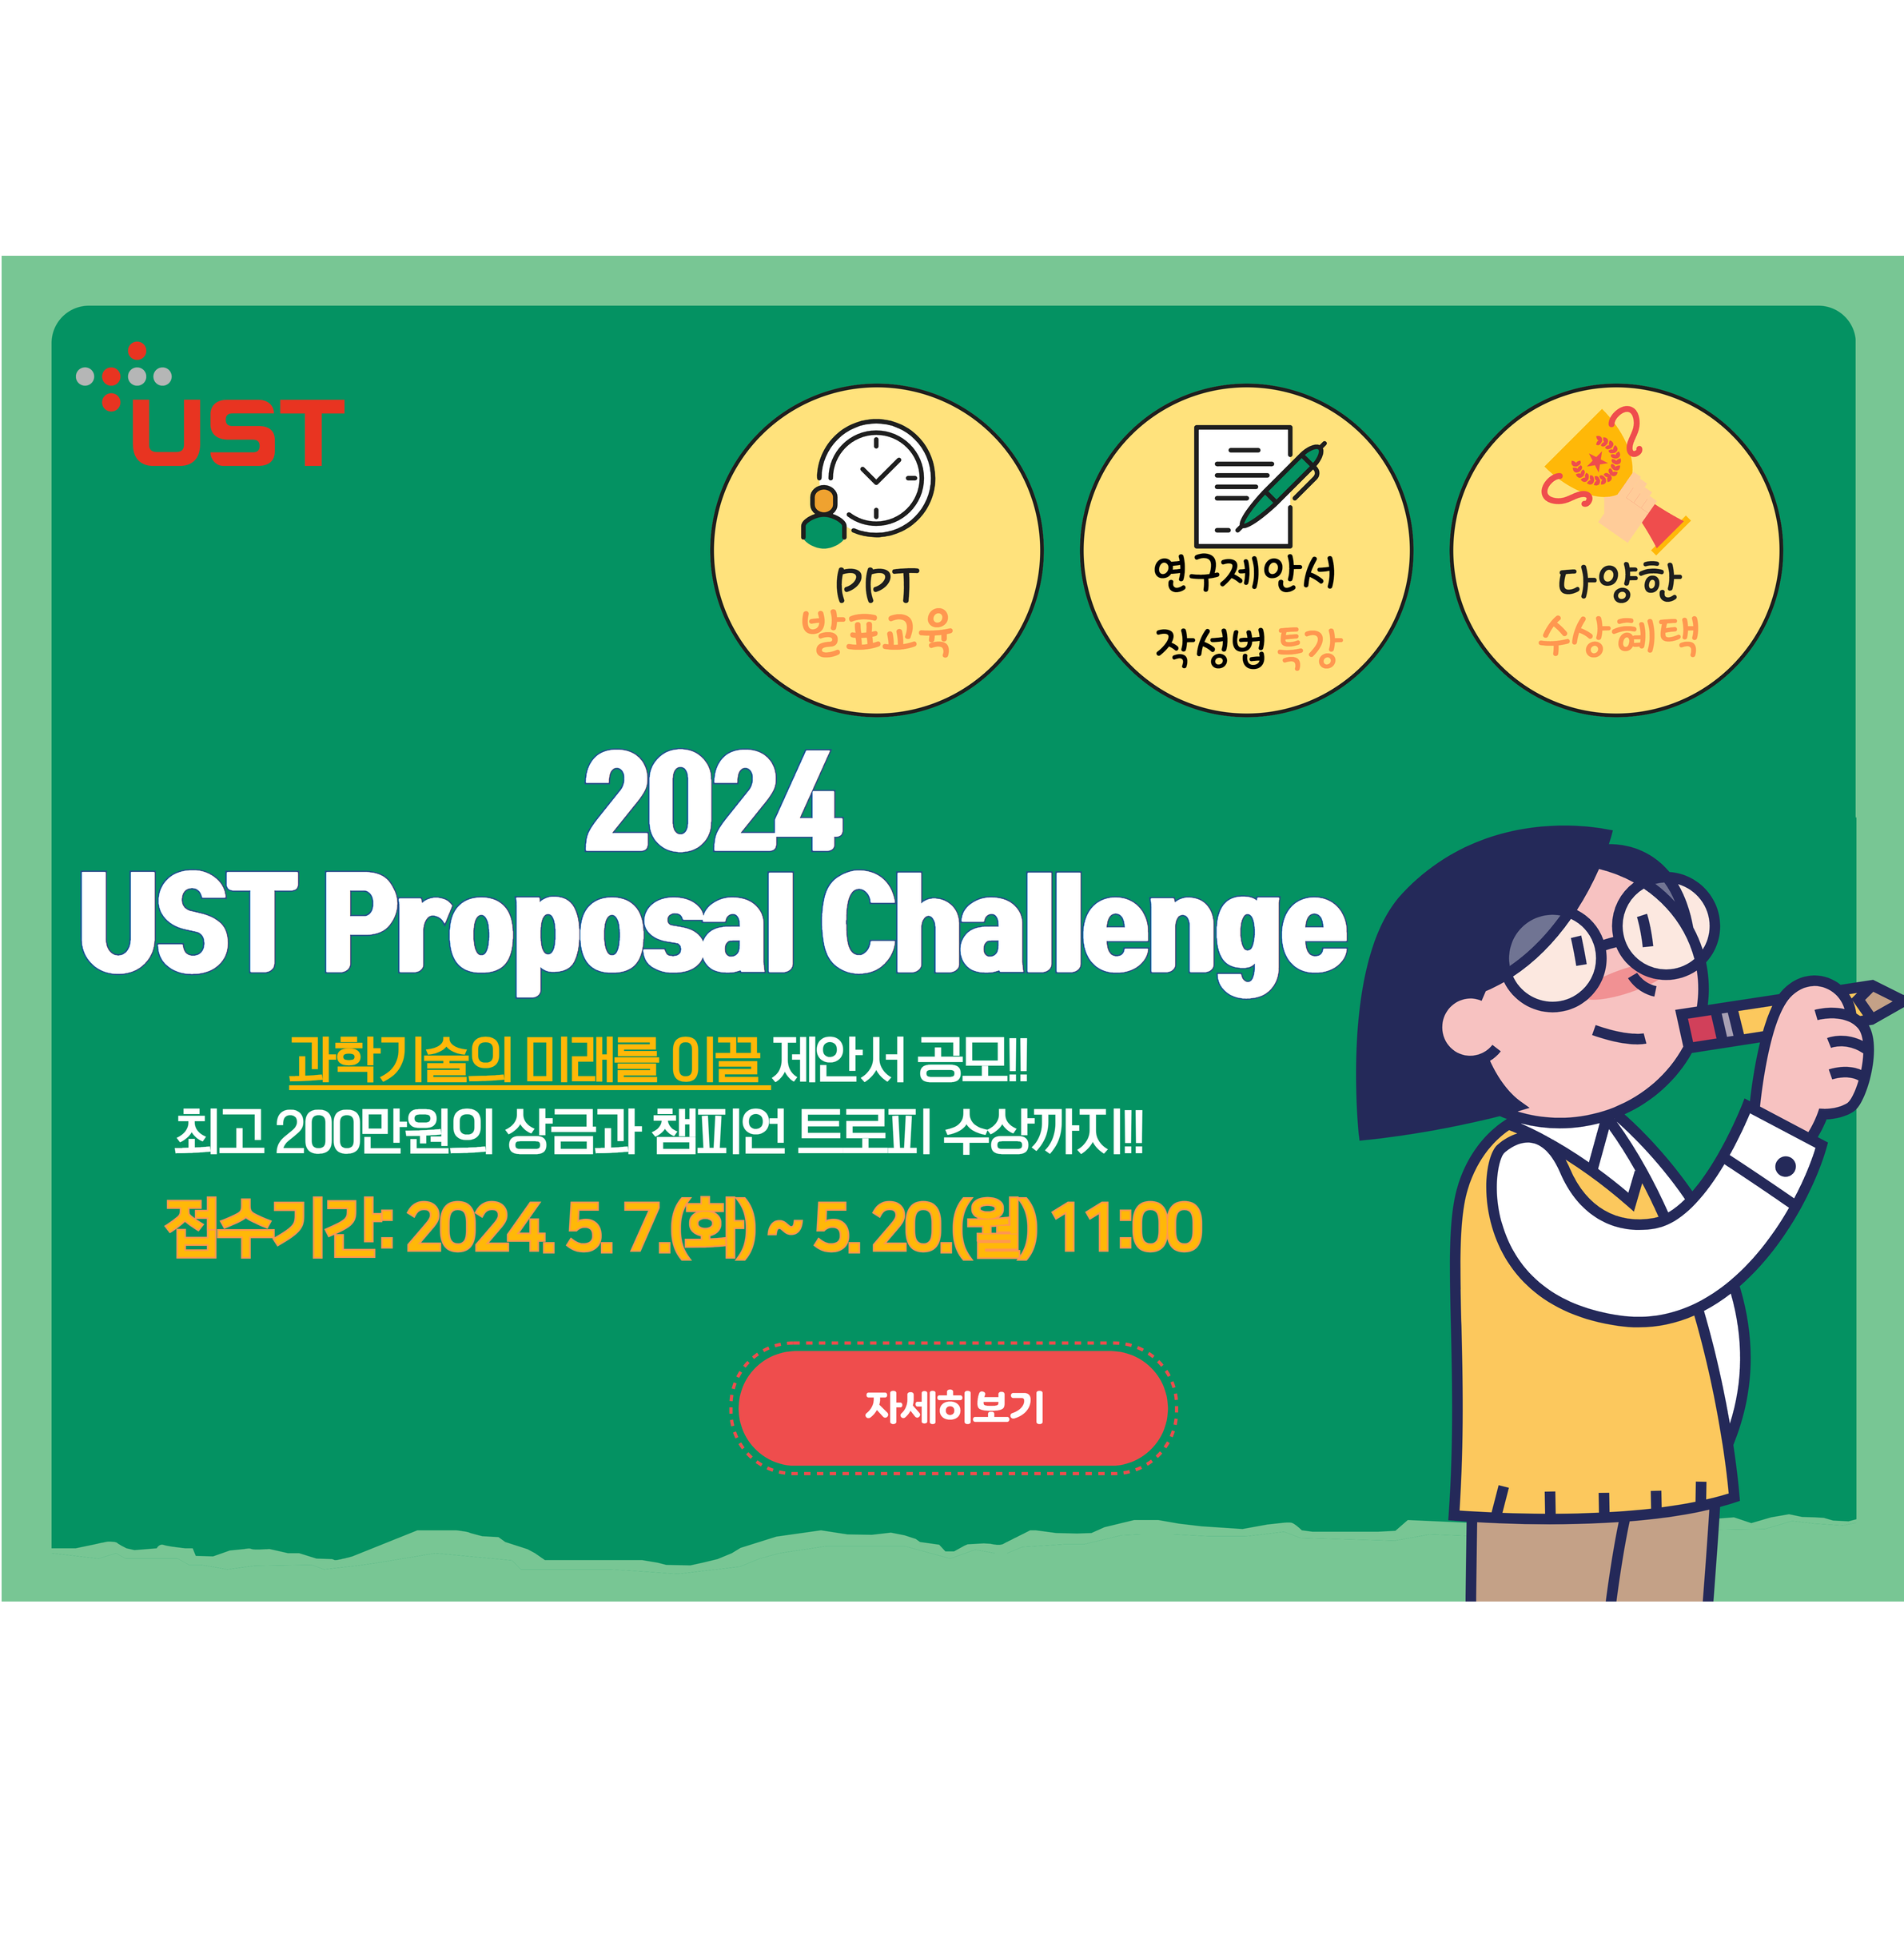 2024 UST Proposal Challenge (PPT 발표교육, 연구제안서 작성법 특강, 다양한 수상혜택)
과학기술의 미래를 이끌 제안서 공모!! 최고 200만원의 상금과 챔피언 트로피 수상까지! 접수기간 : 2024.5.7(화)~5.20(월) 11:00